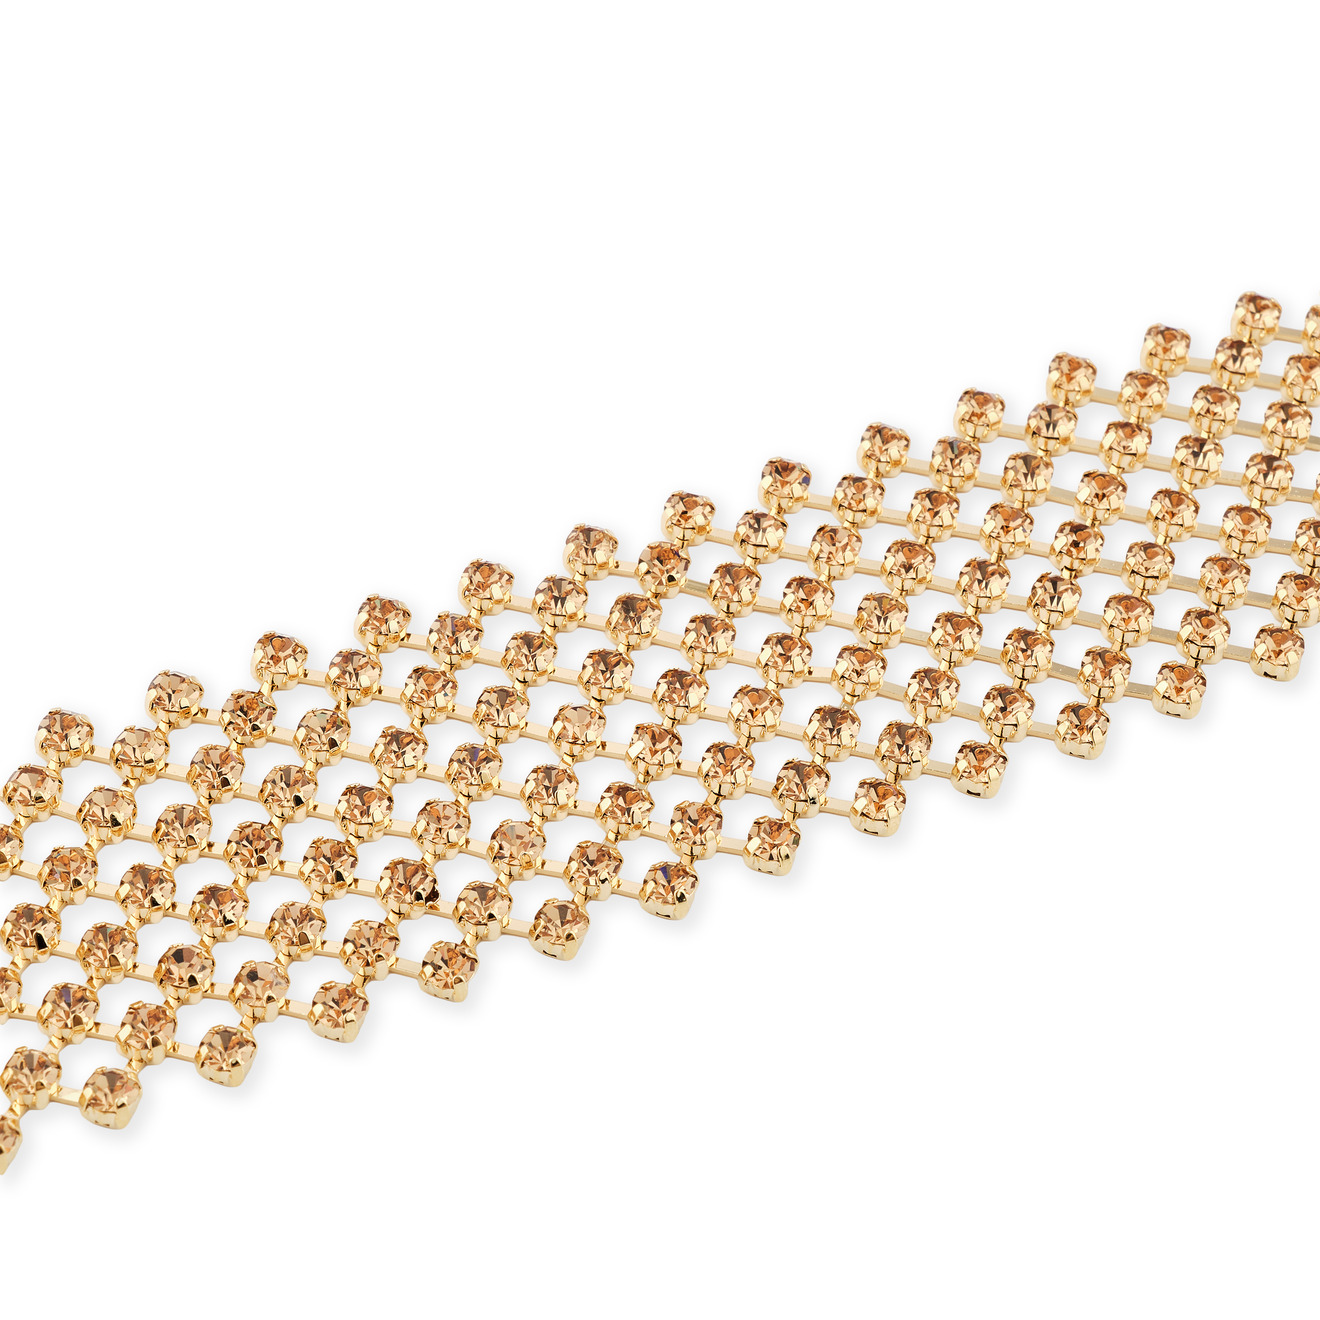 Herald Percy Золотистый широкий чокер с кристаллами herald percy золотистый сотуар полностью покрытый кристаллами